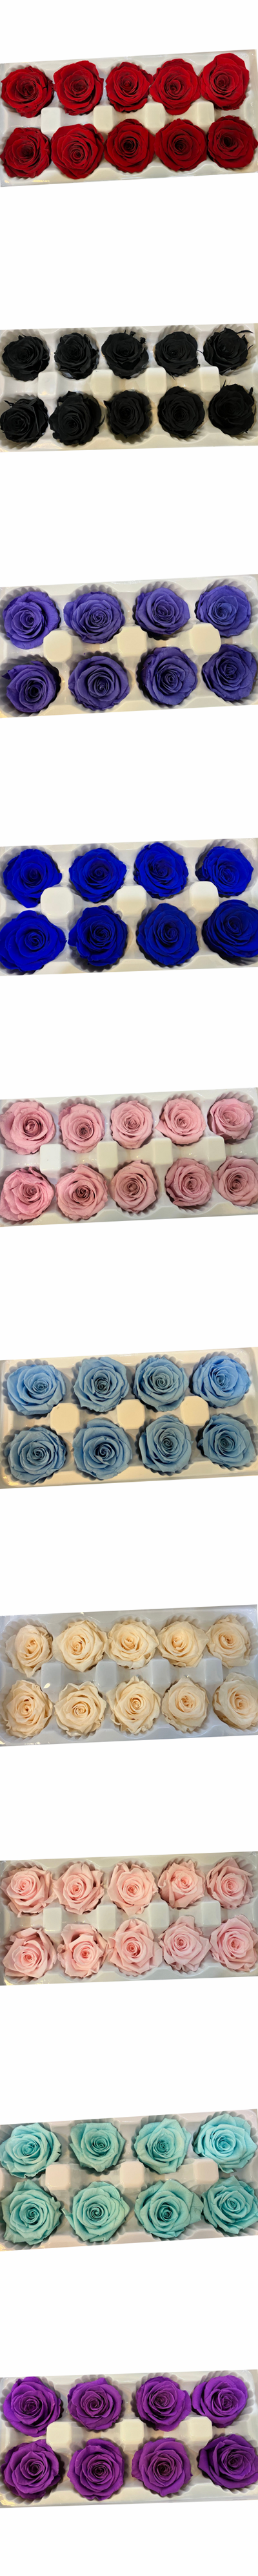 Preserved Blue Roses